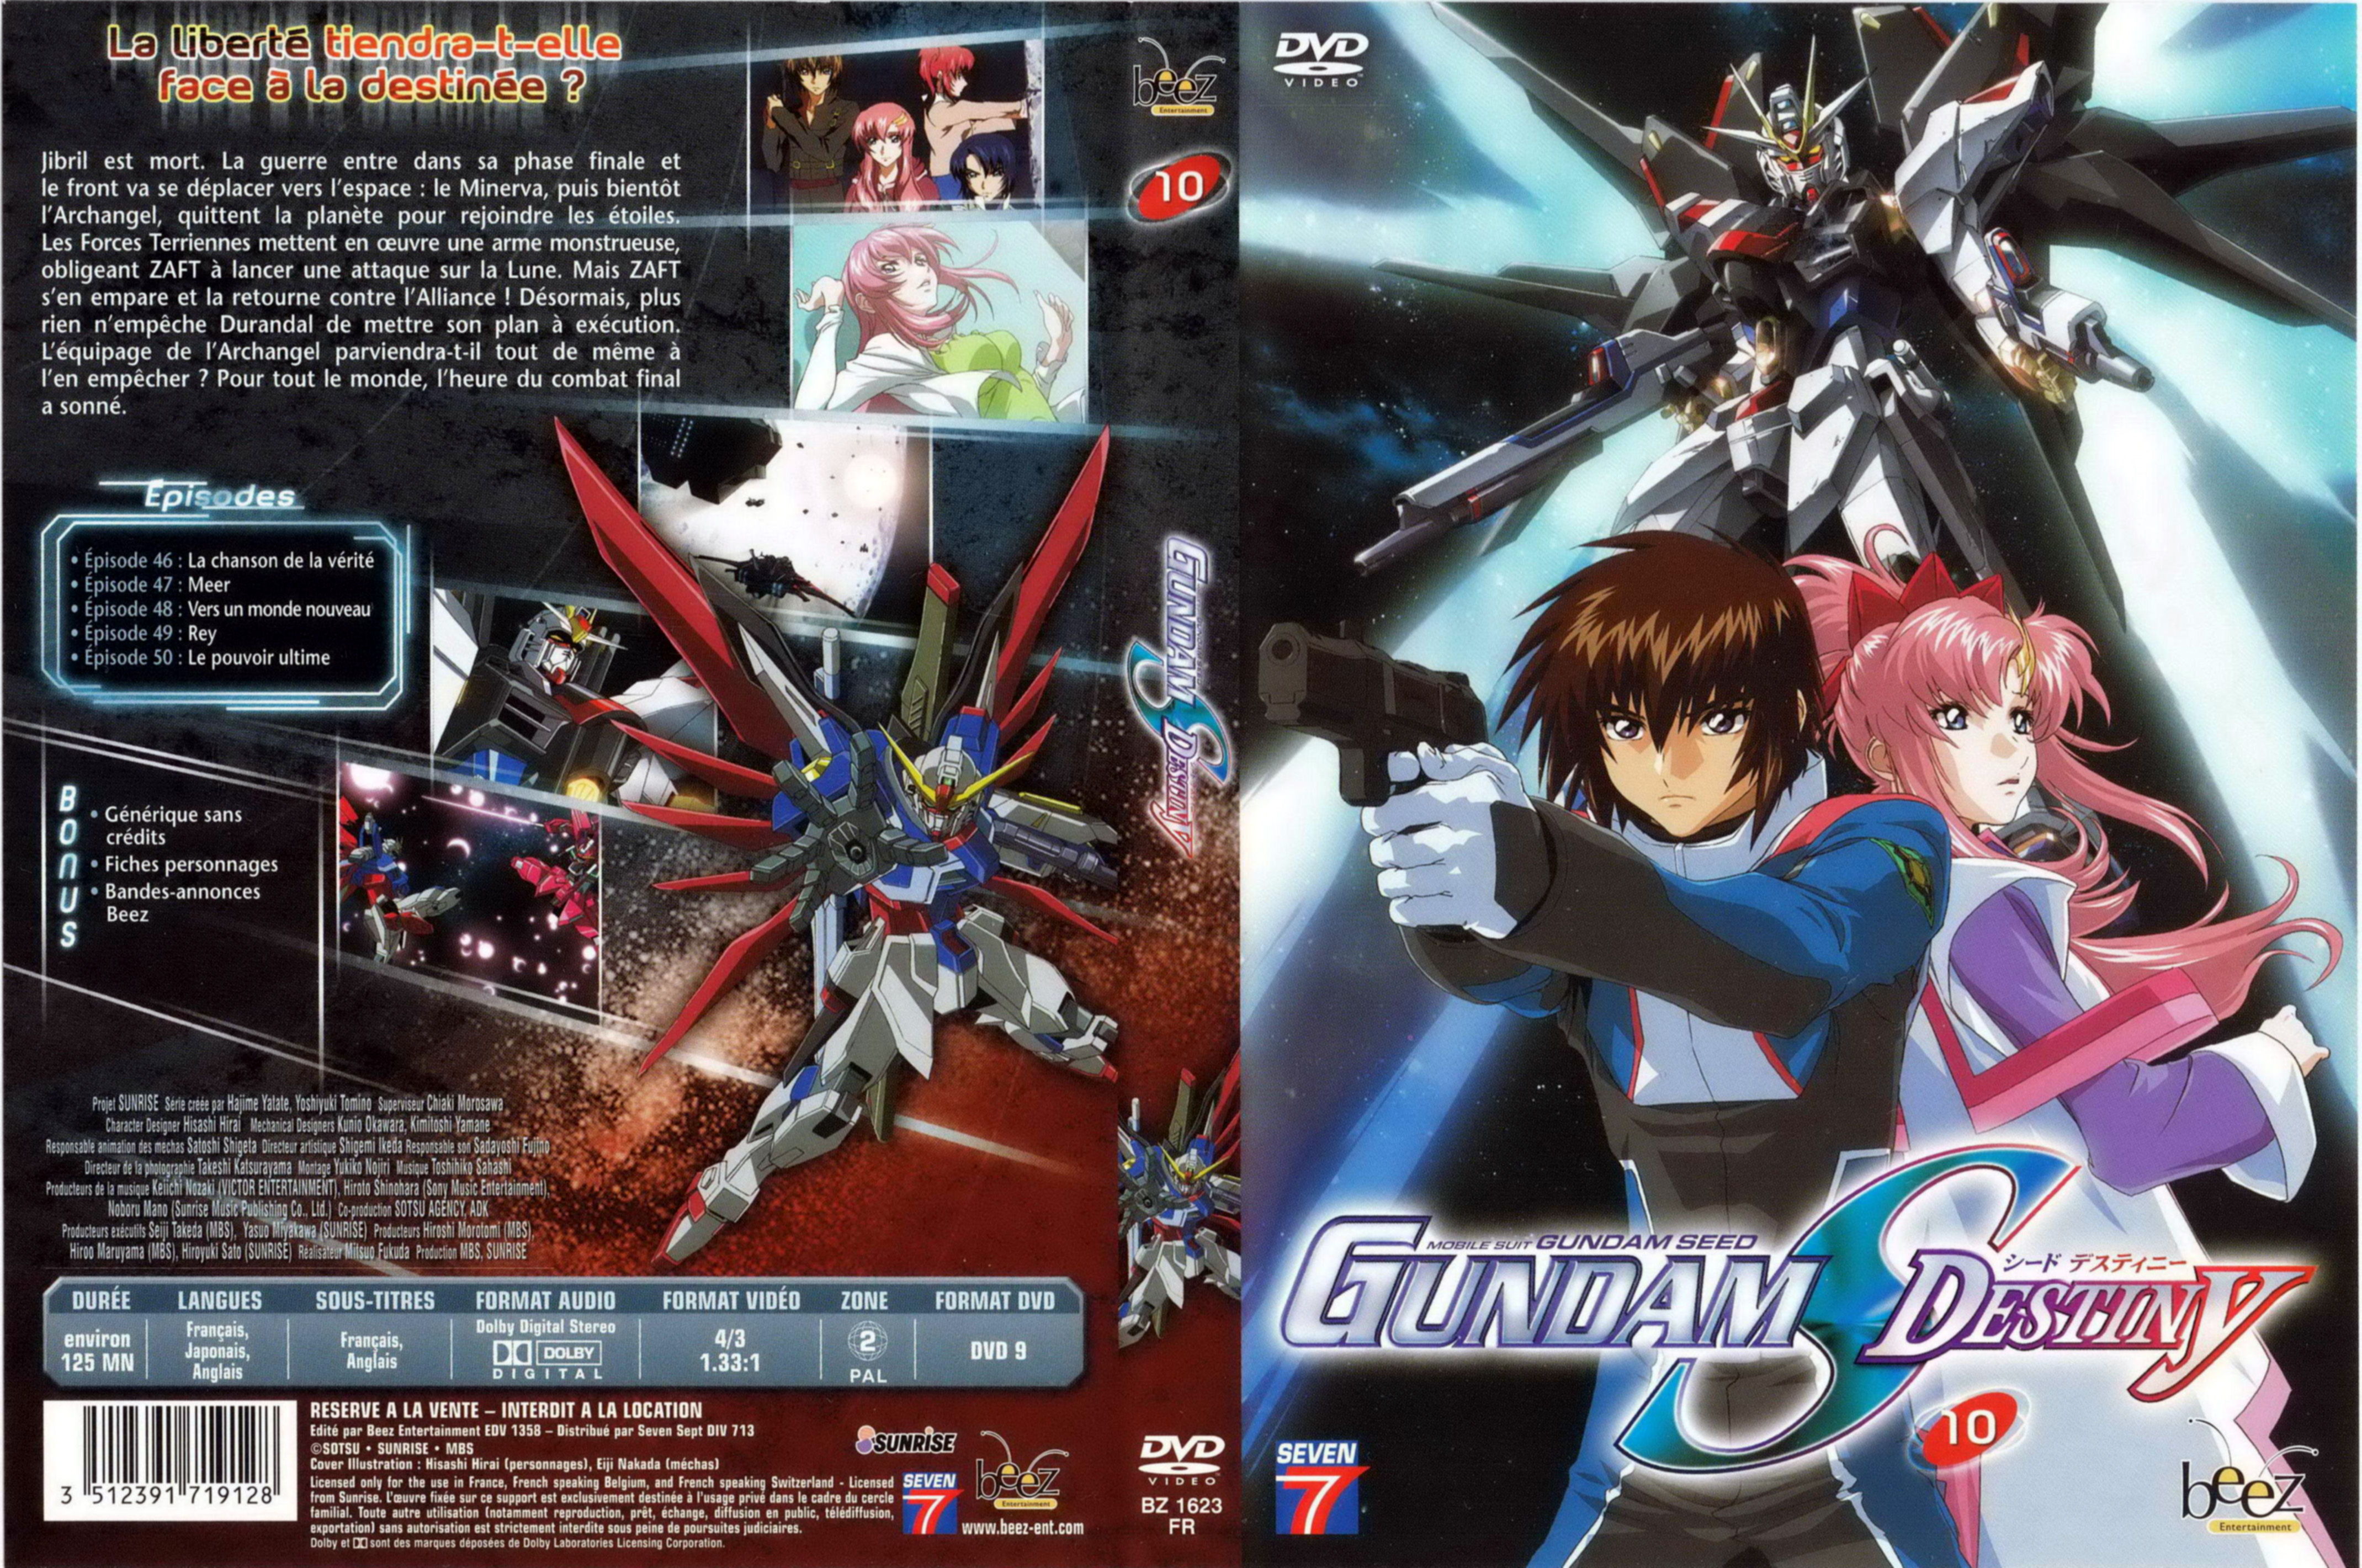 Jaquette DVD Gundam destiny vol 10